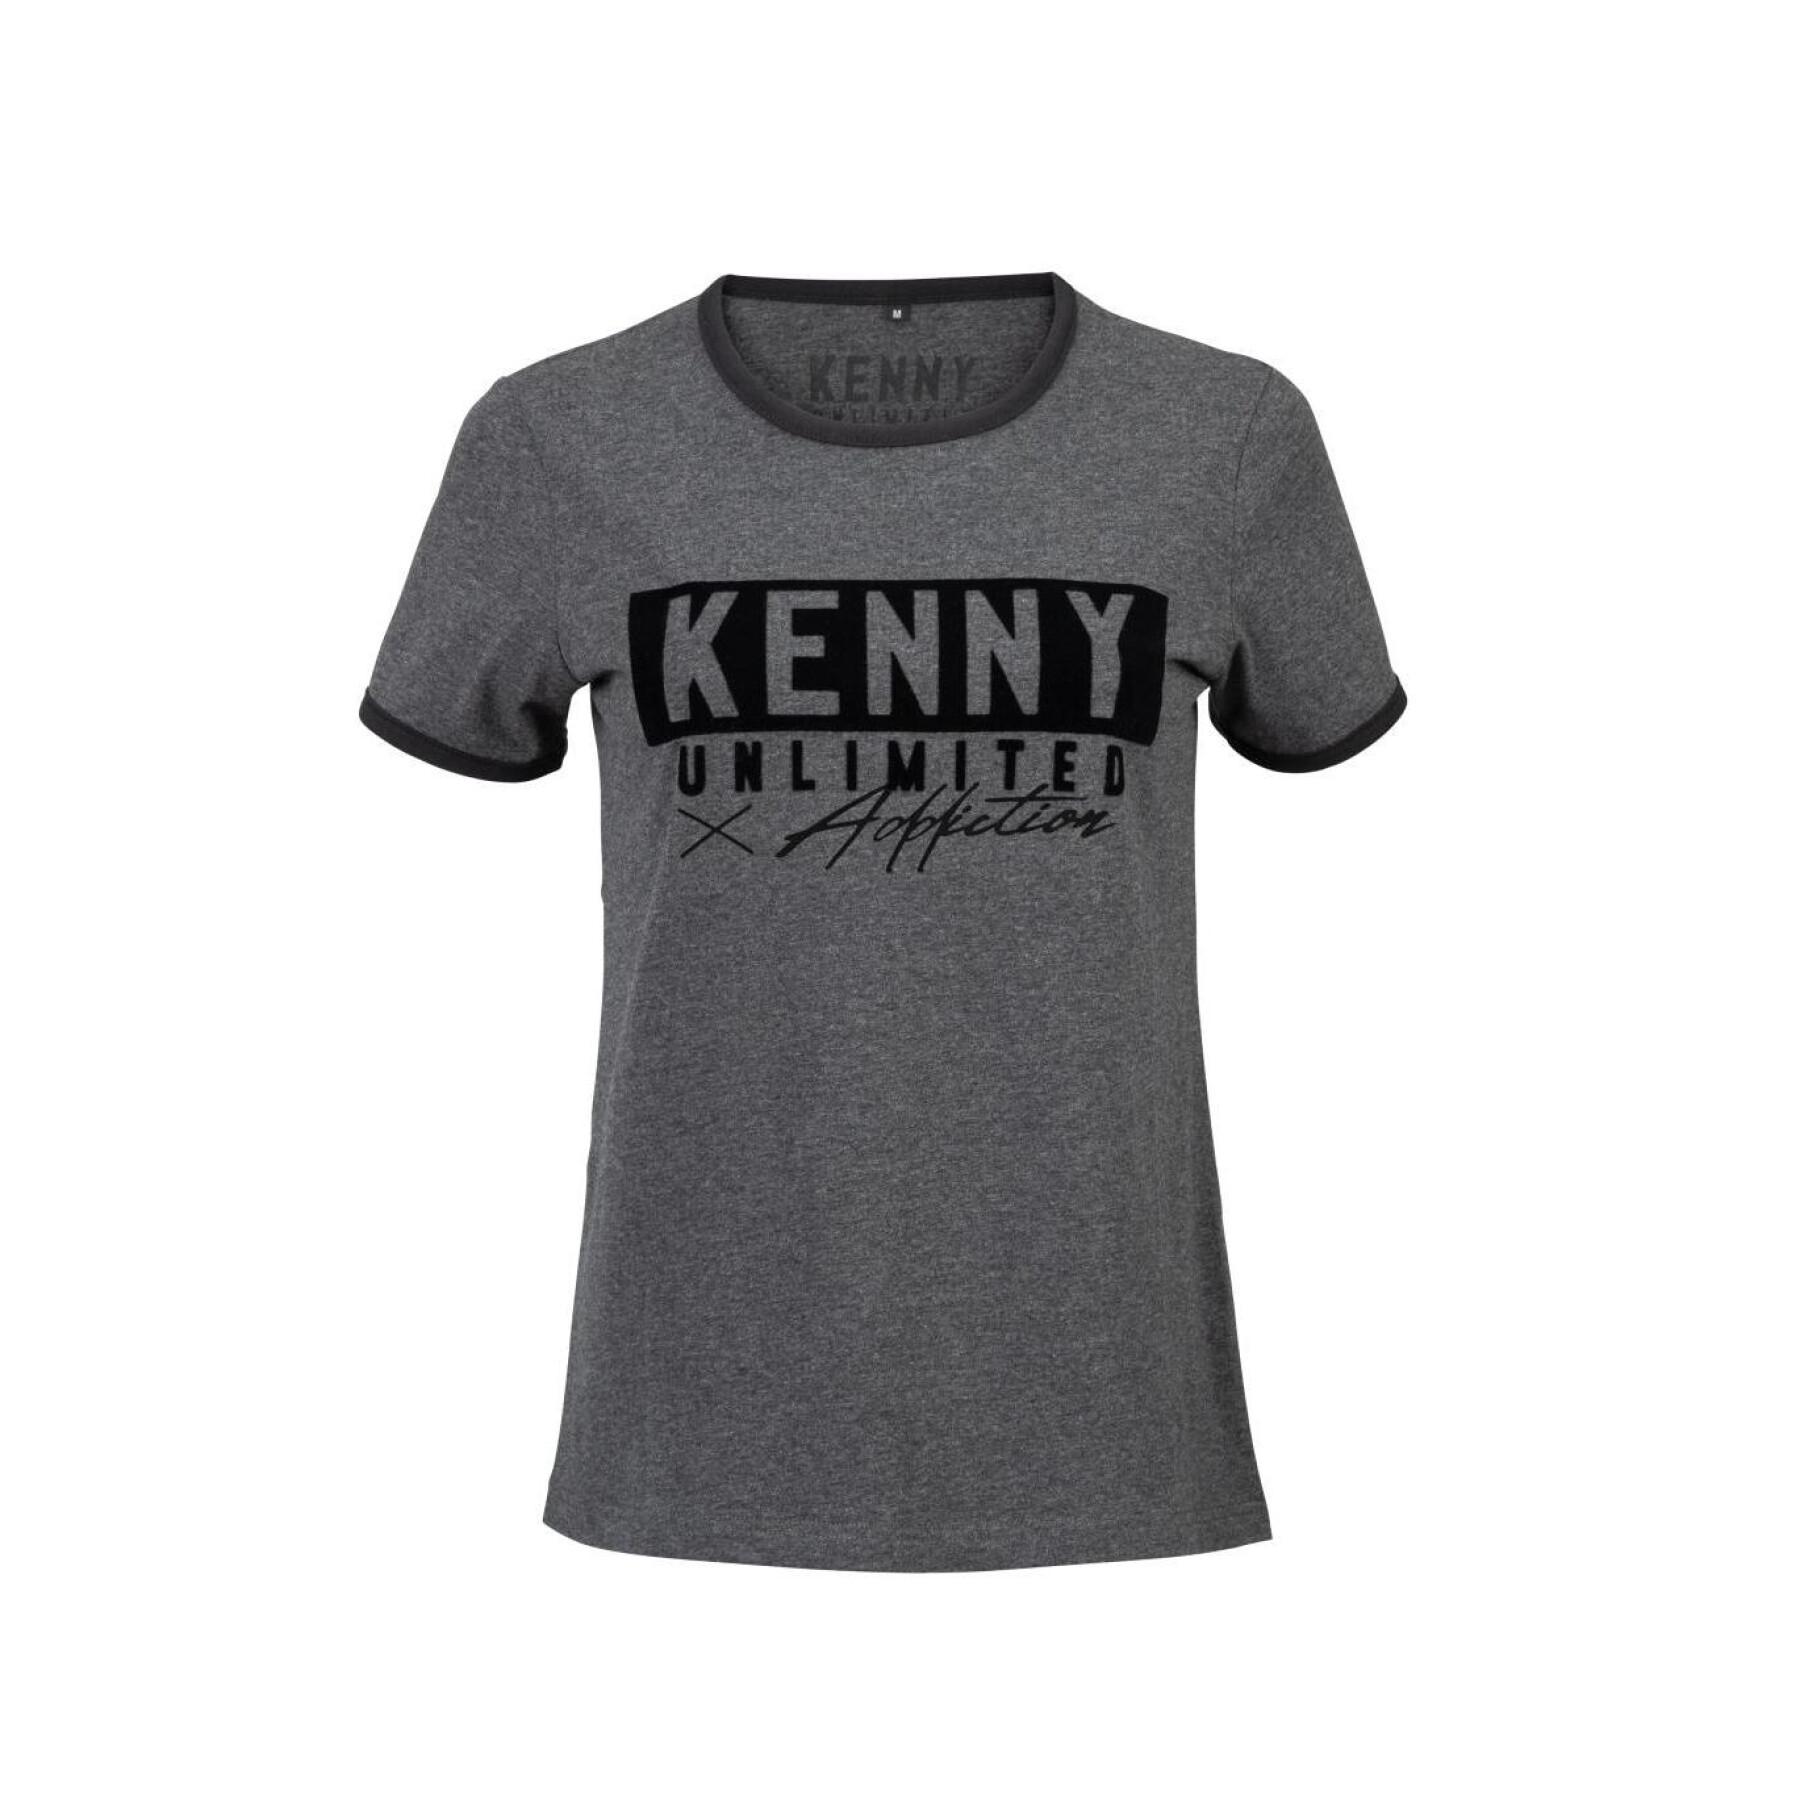 Camiseta feminina Kenny label